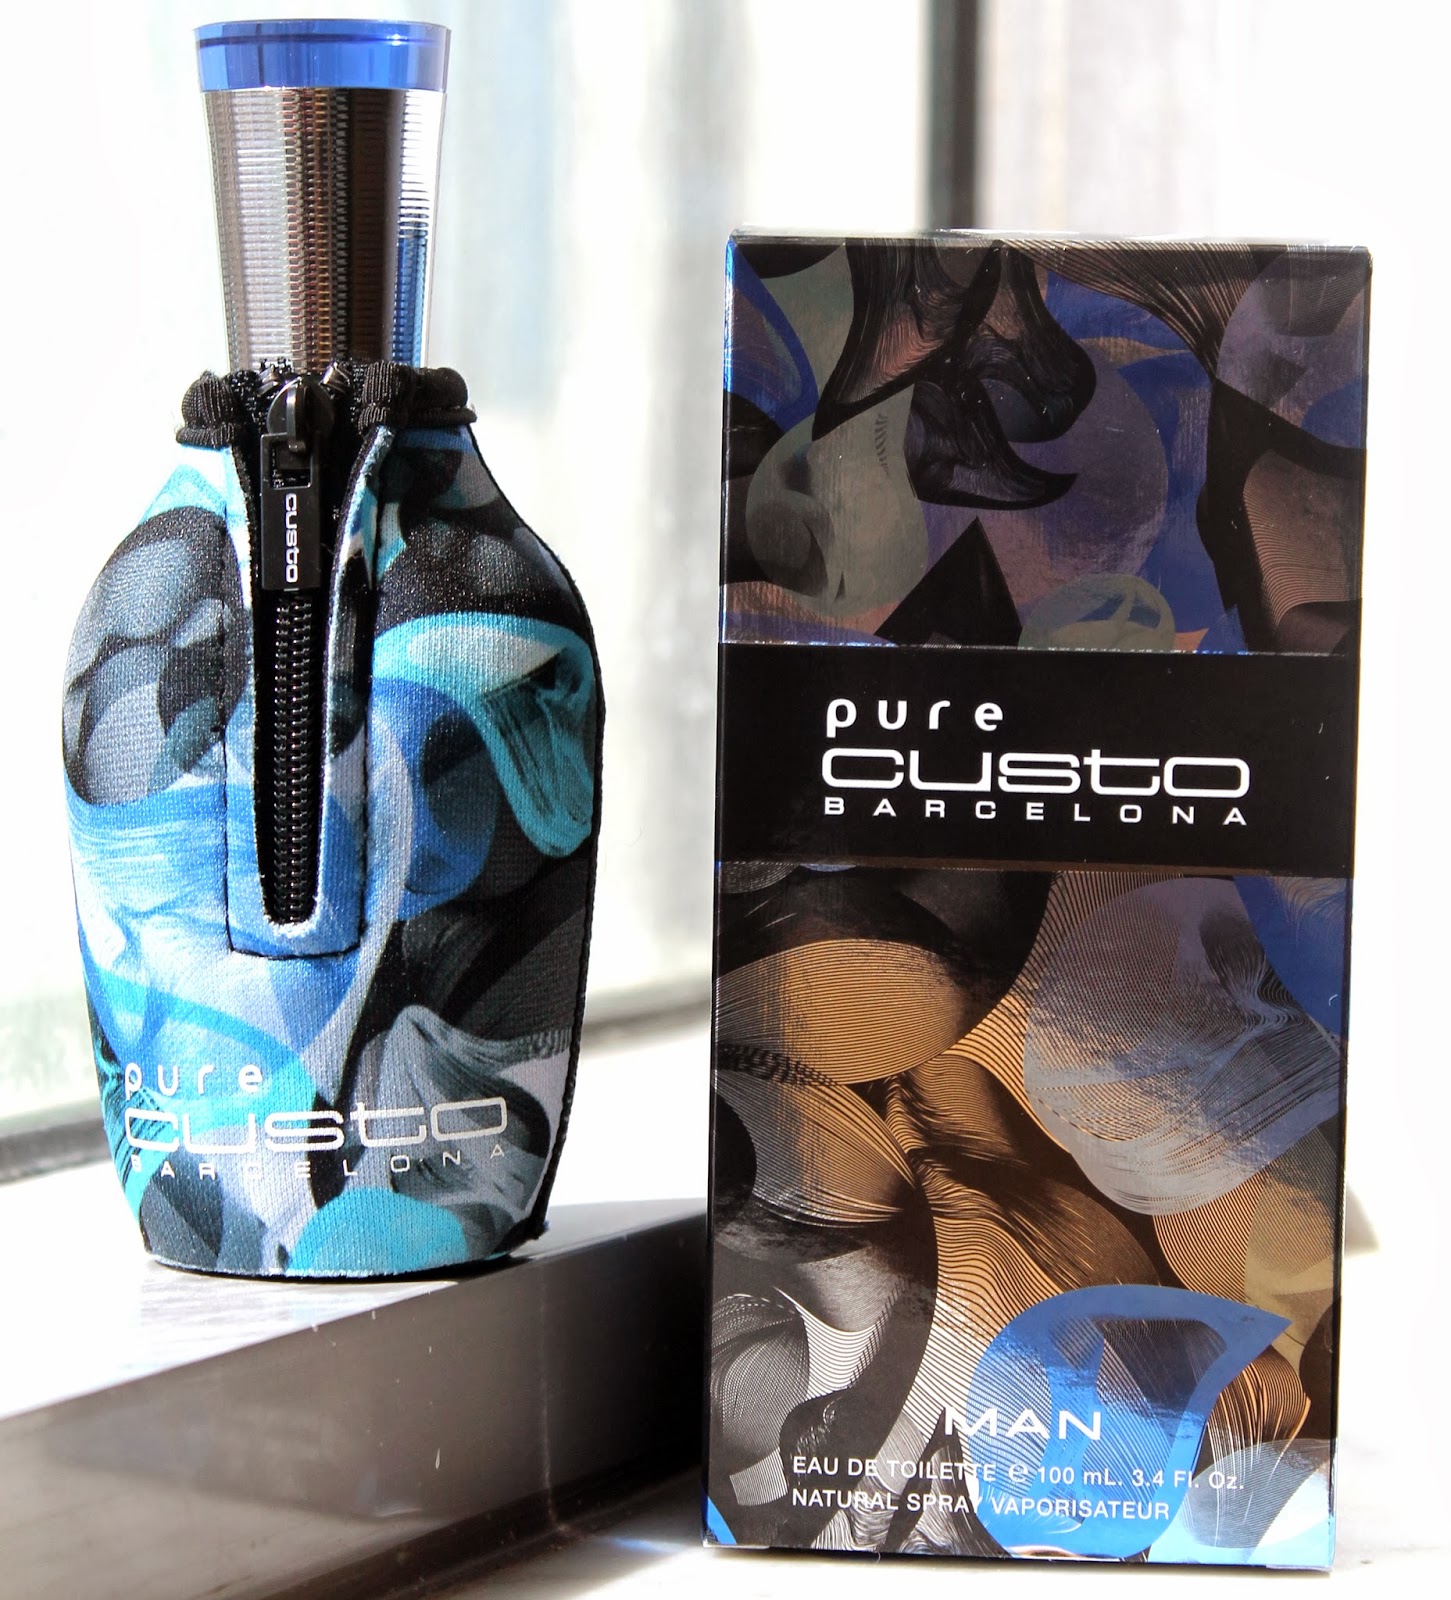 http://shop.custobarcelona.com/row/en/index.php/accessories-1/men/fragrance-men/pure-custo-men-50ml